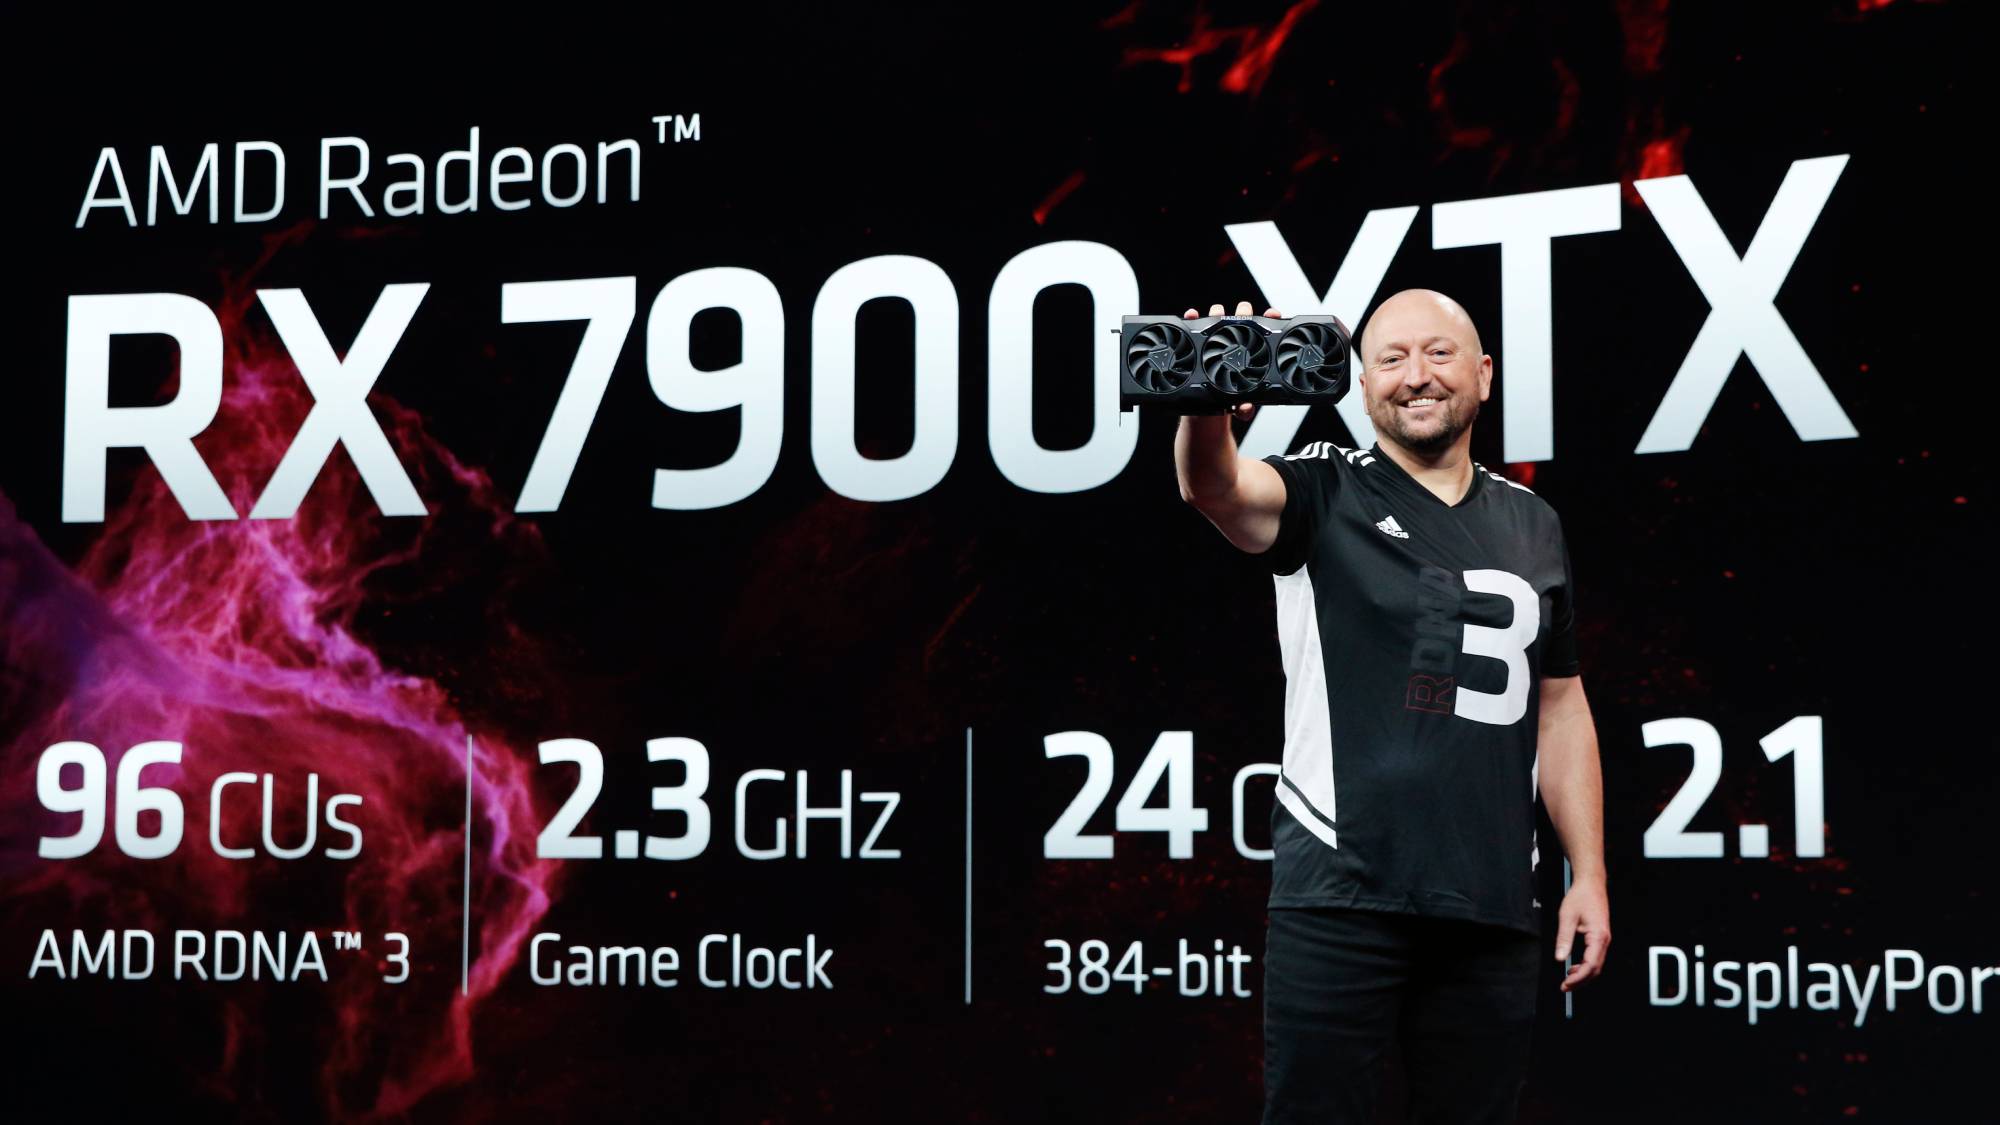 AMD's Scott Herkelmann holding up the Radeon RX 7900 XTX graphics card